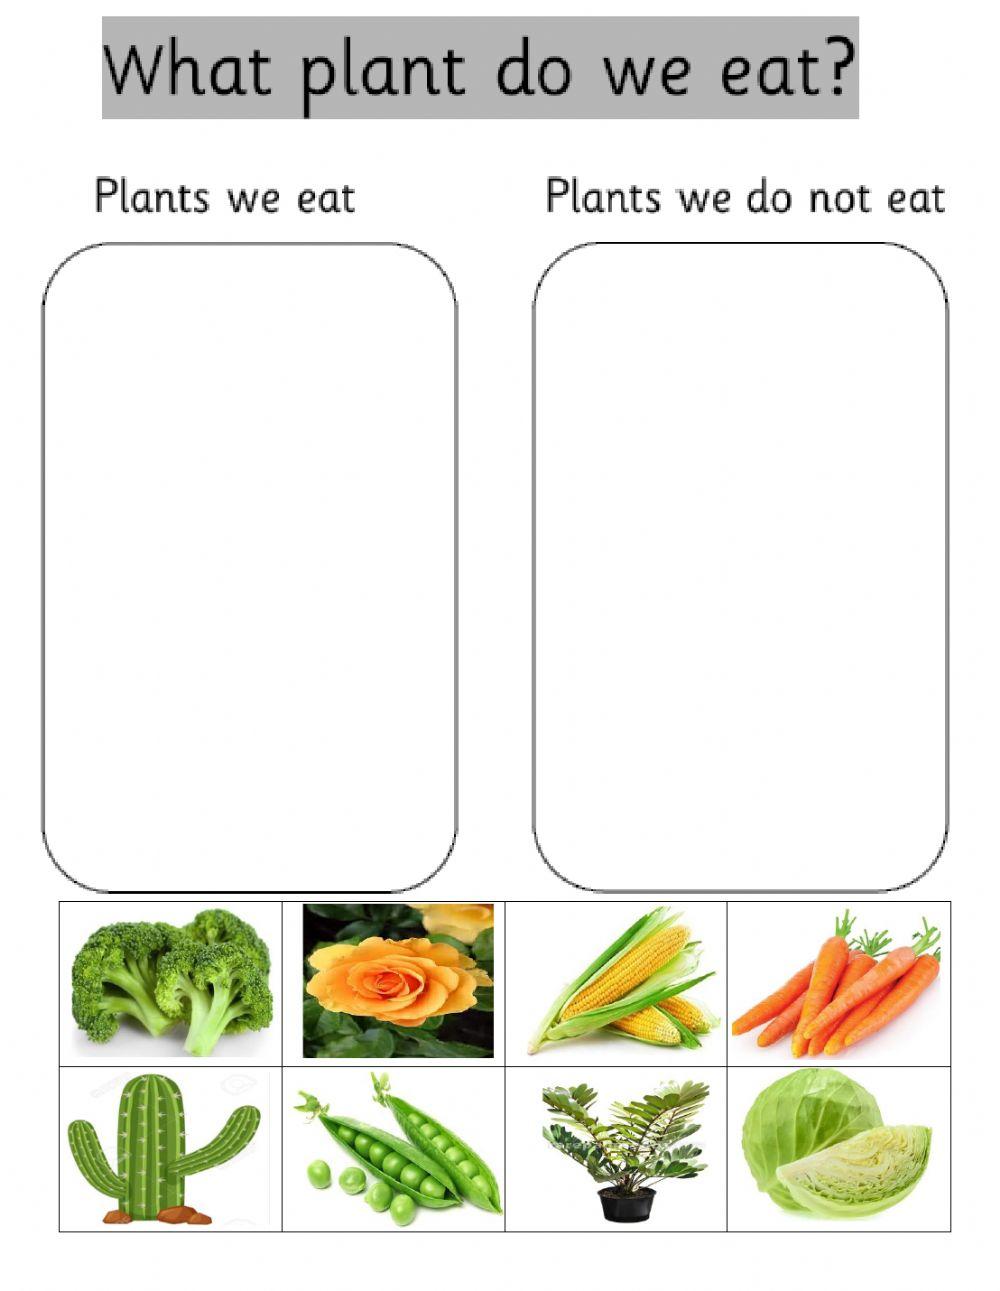 Plants eaten and not eaten